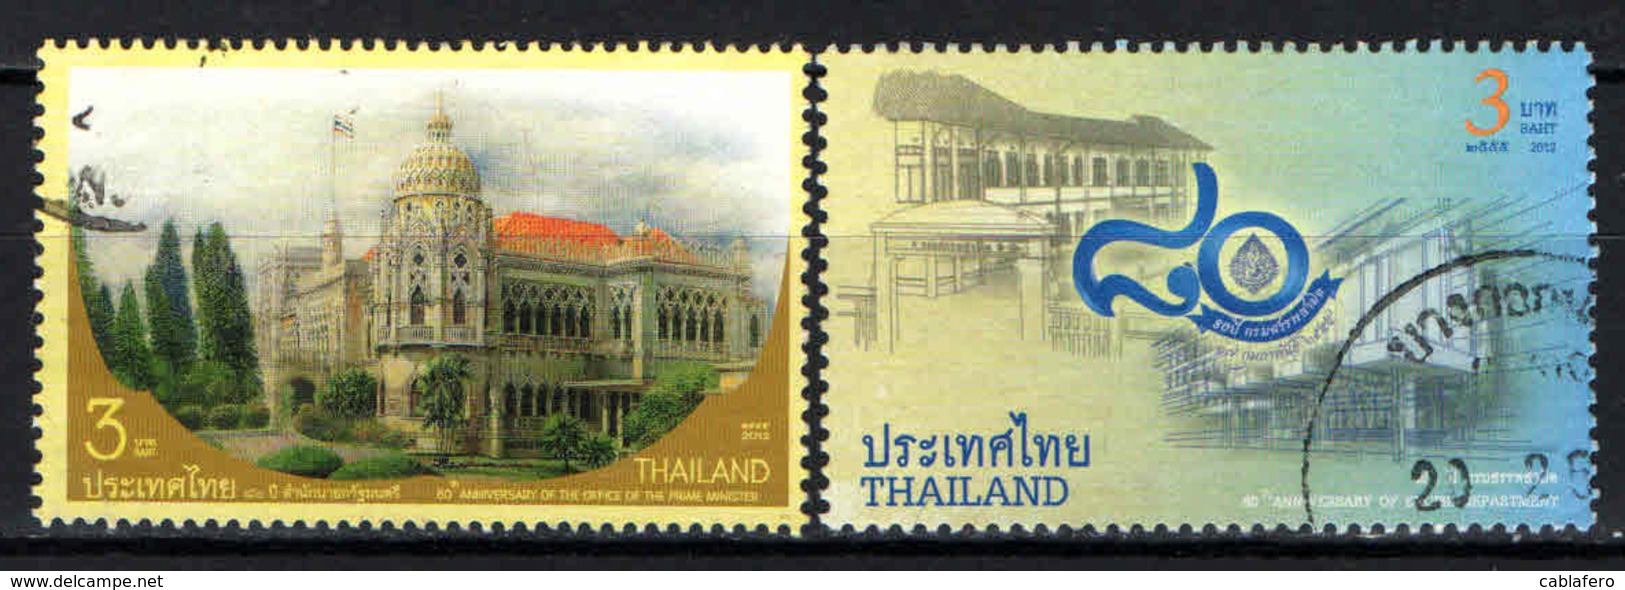 TAILANDIA - 2012 - PALAZZI STORICI - USATI - Tailandia